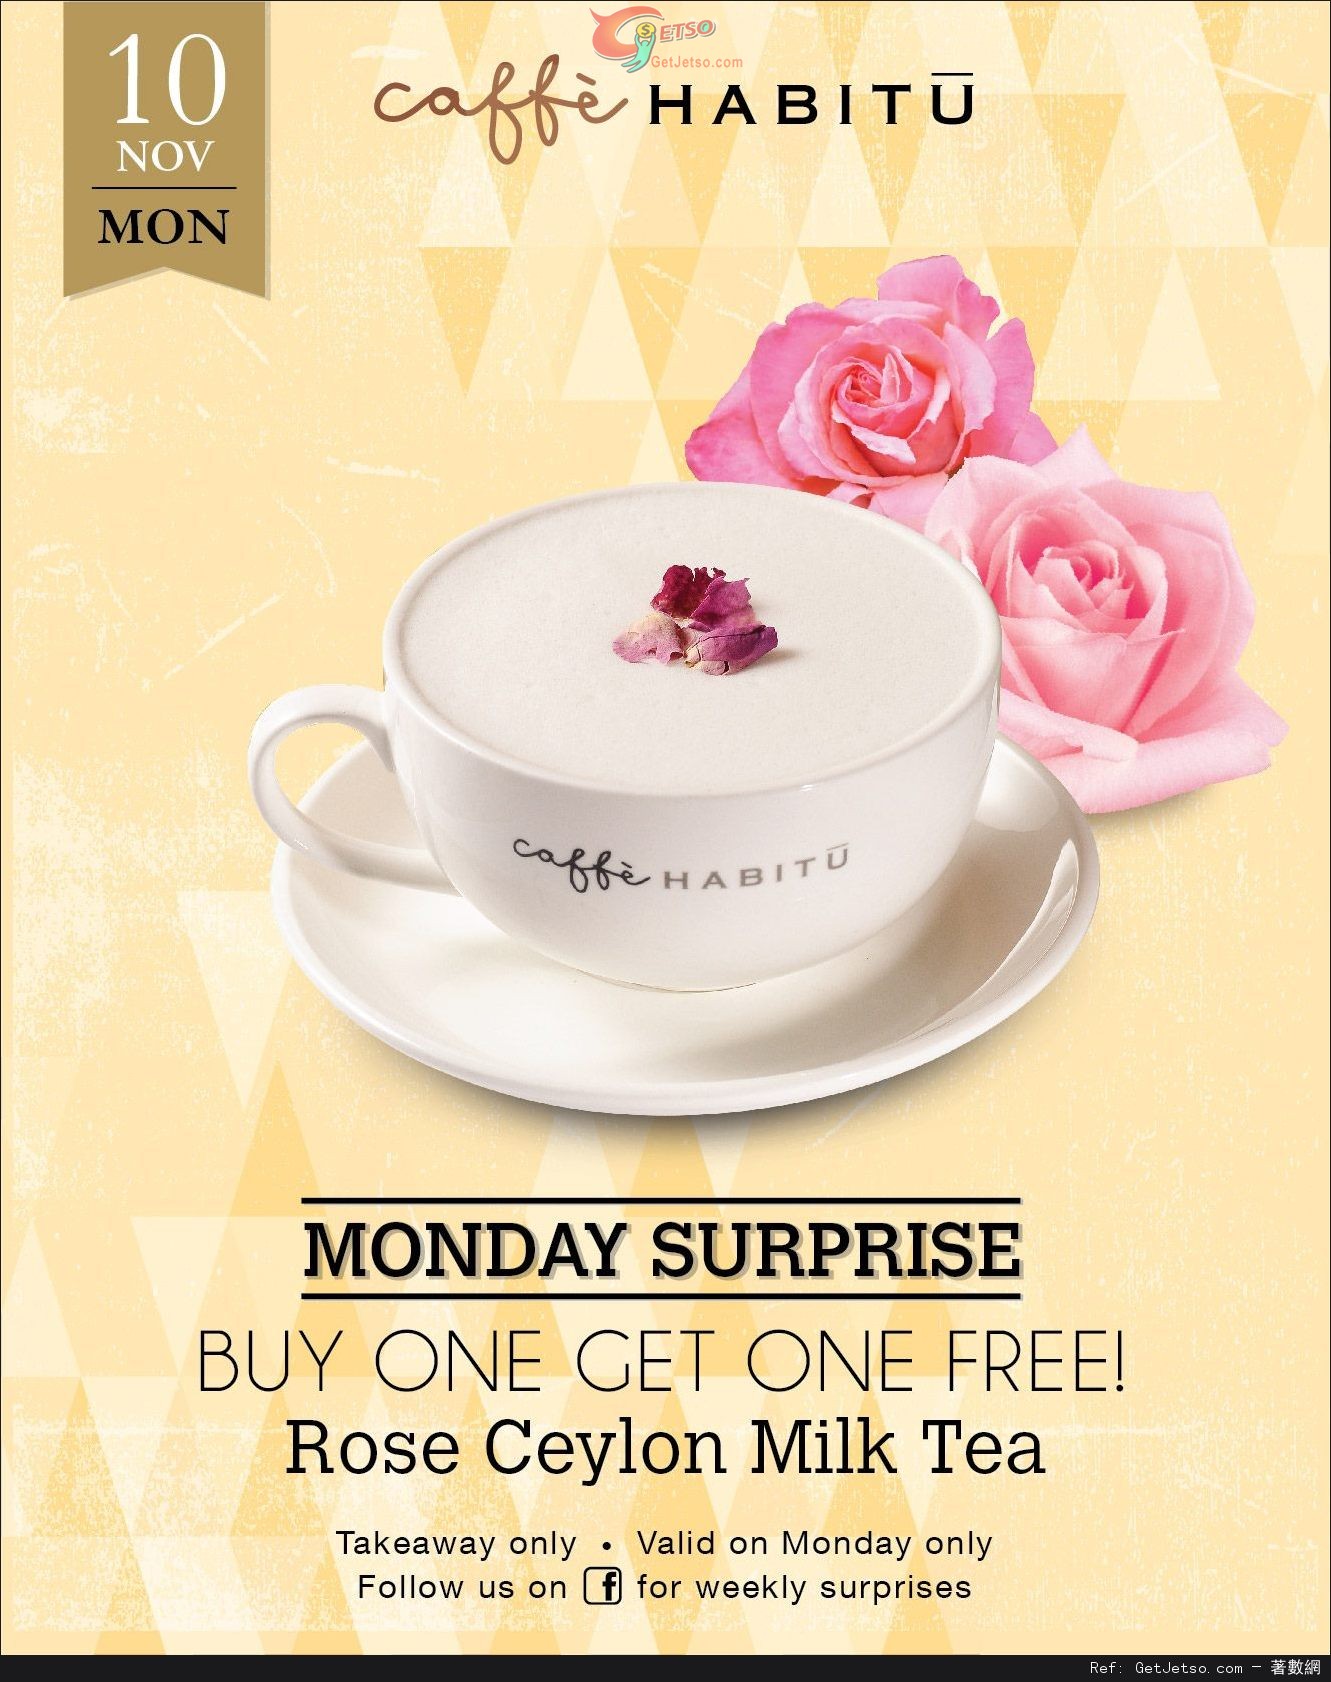 Caffe HABITU Rose Ceylon Milk Tea 買1送1優惠(14年11月10日)圖片1